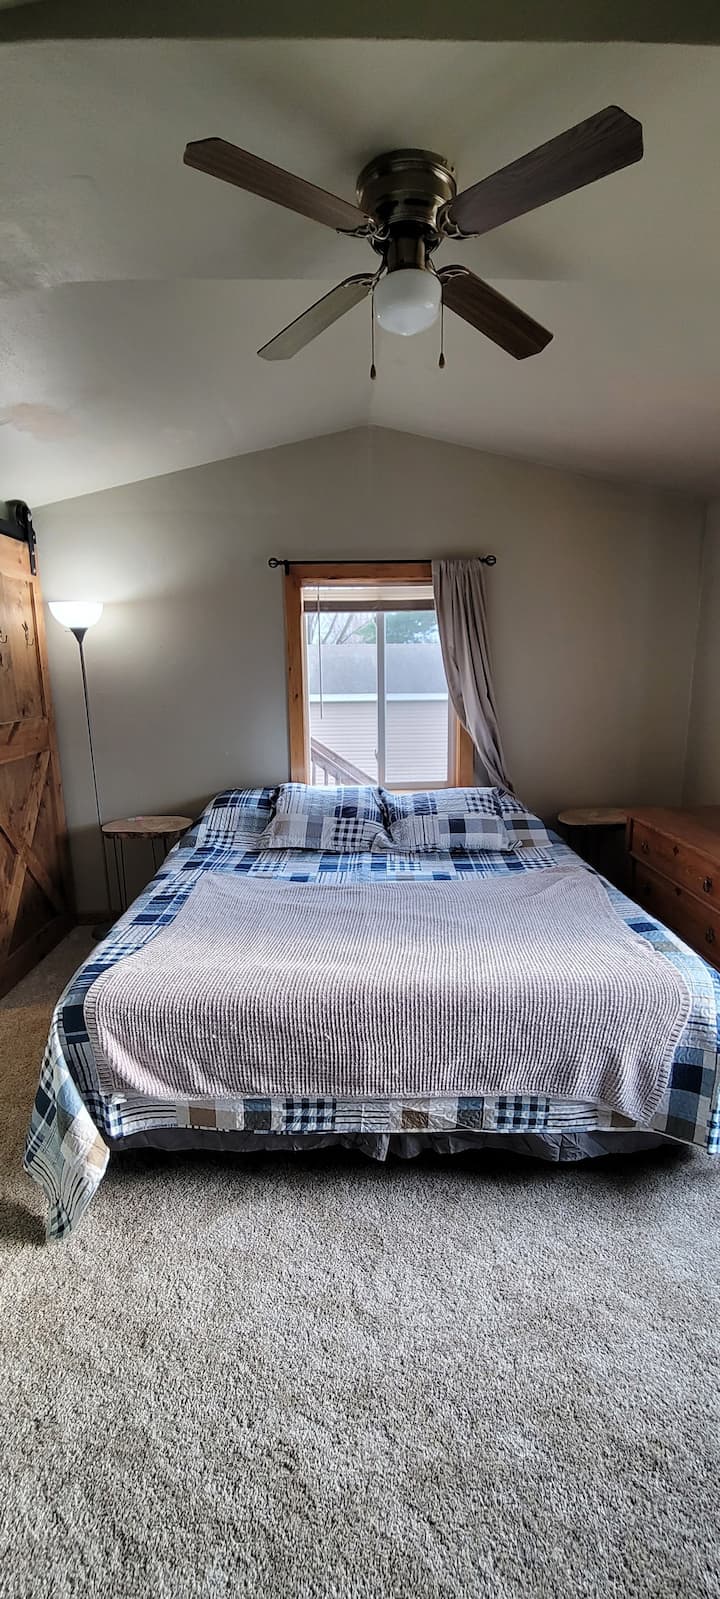 King bed in main bedroom